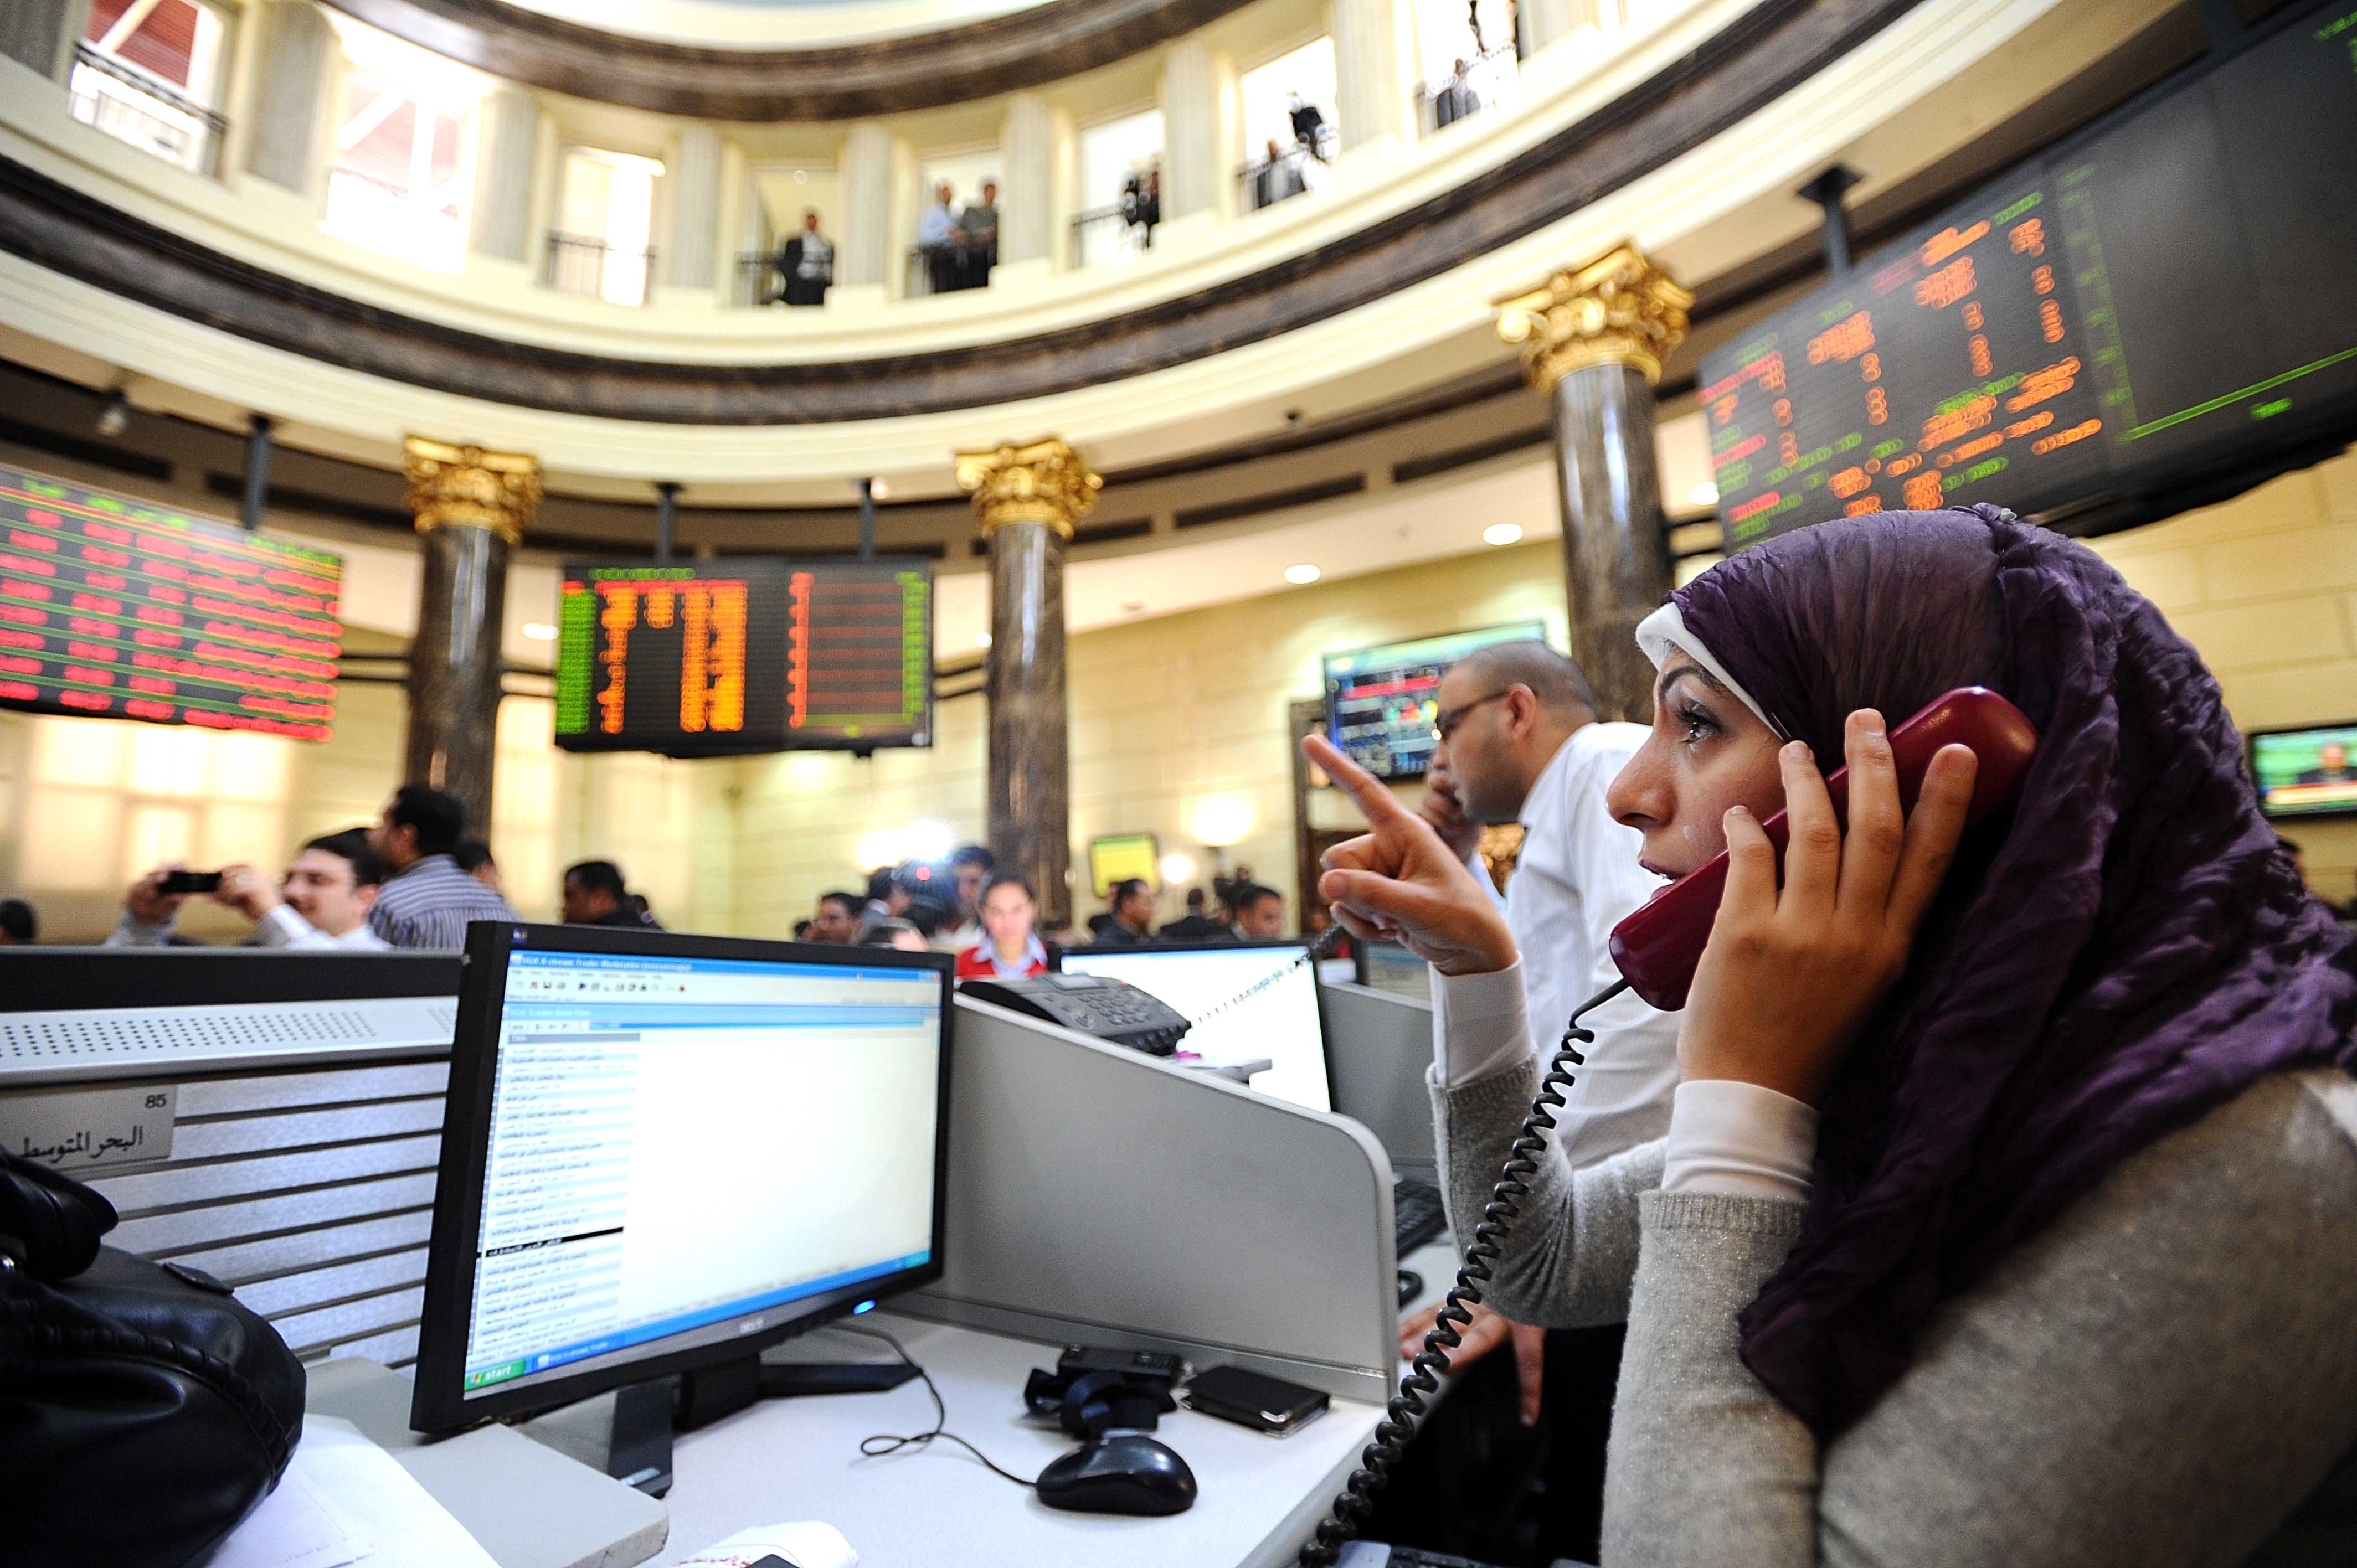 Bourse sheds EGP 15.99bn; capital gain tax takes the blame - Daily News Egypt